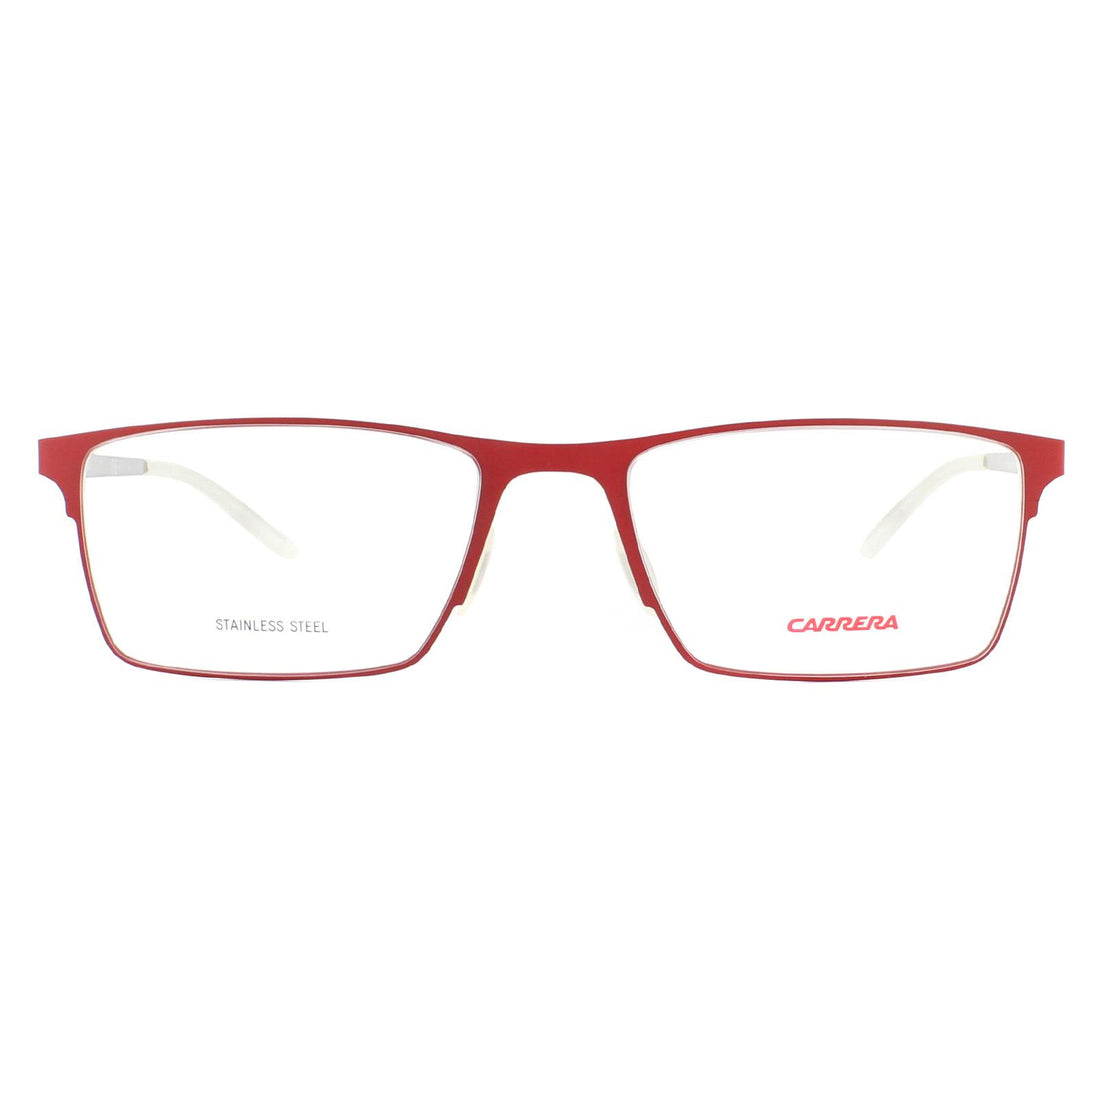 Carrera CA6662 Glasses Frames Red